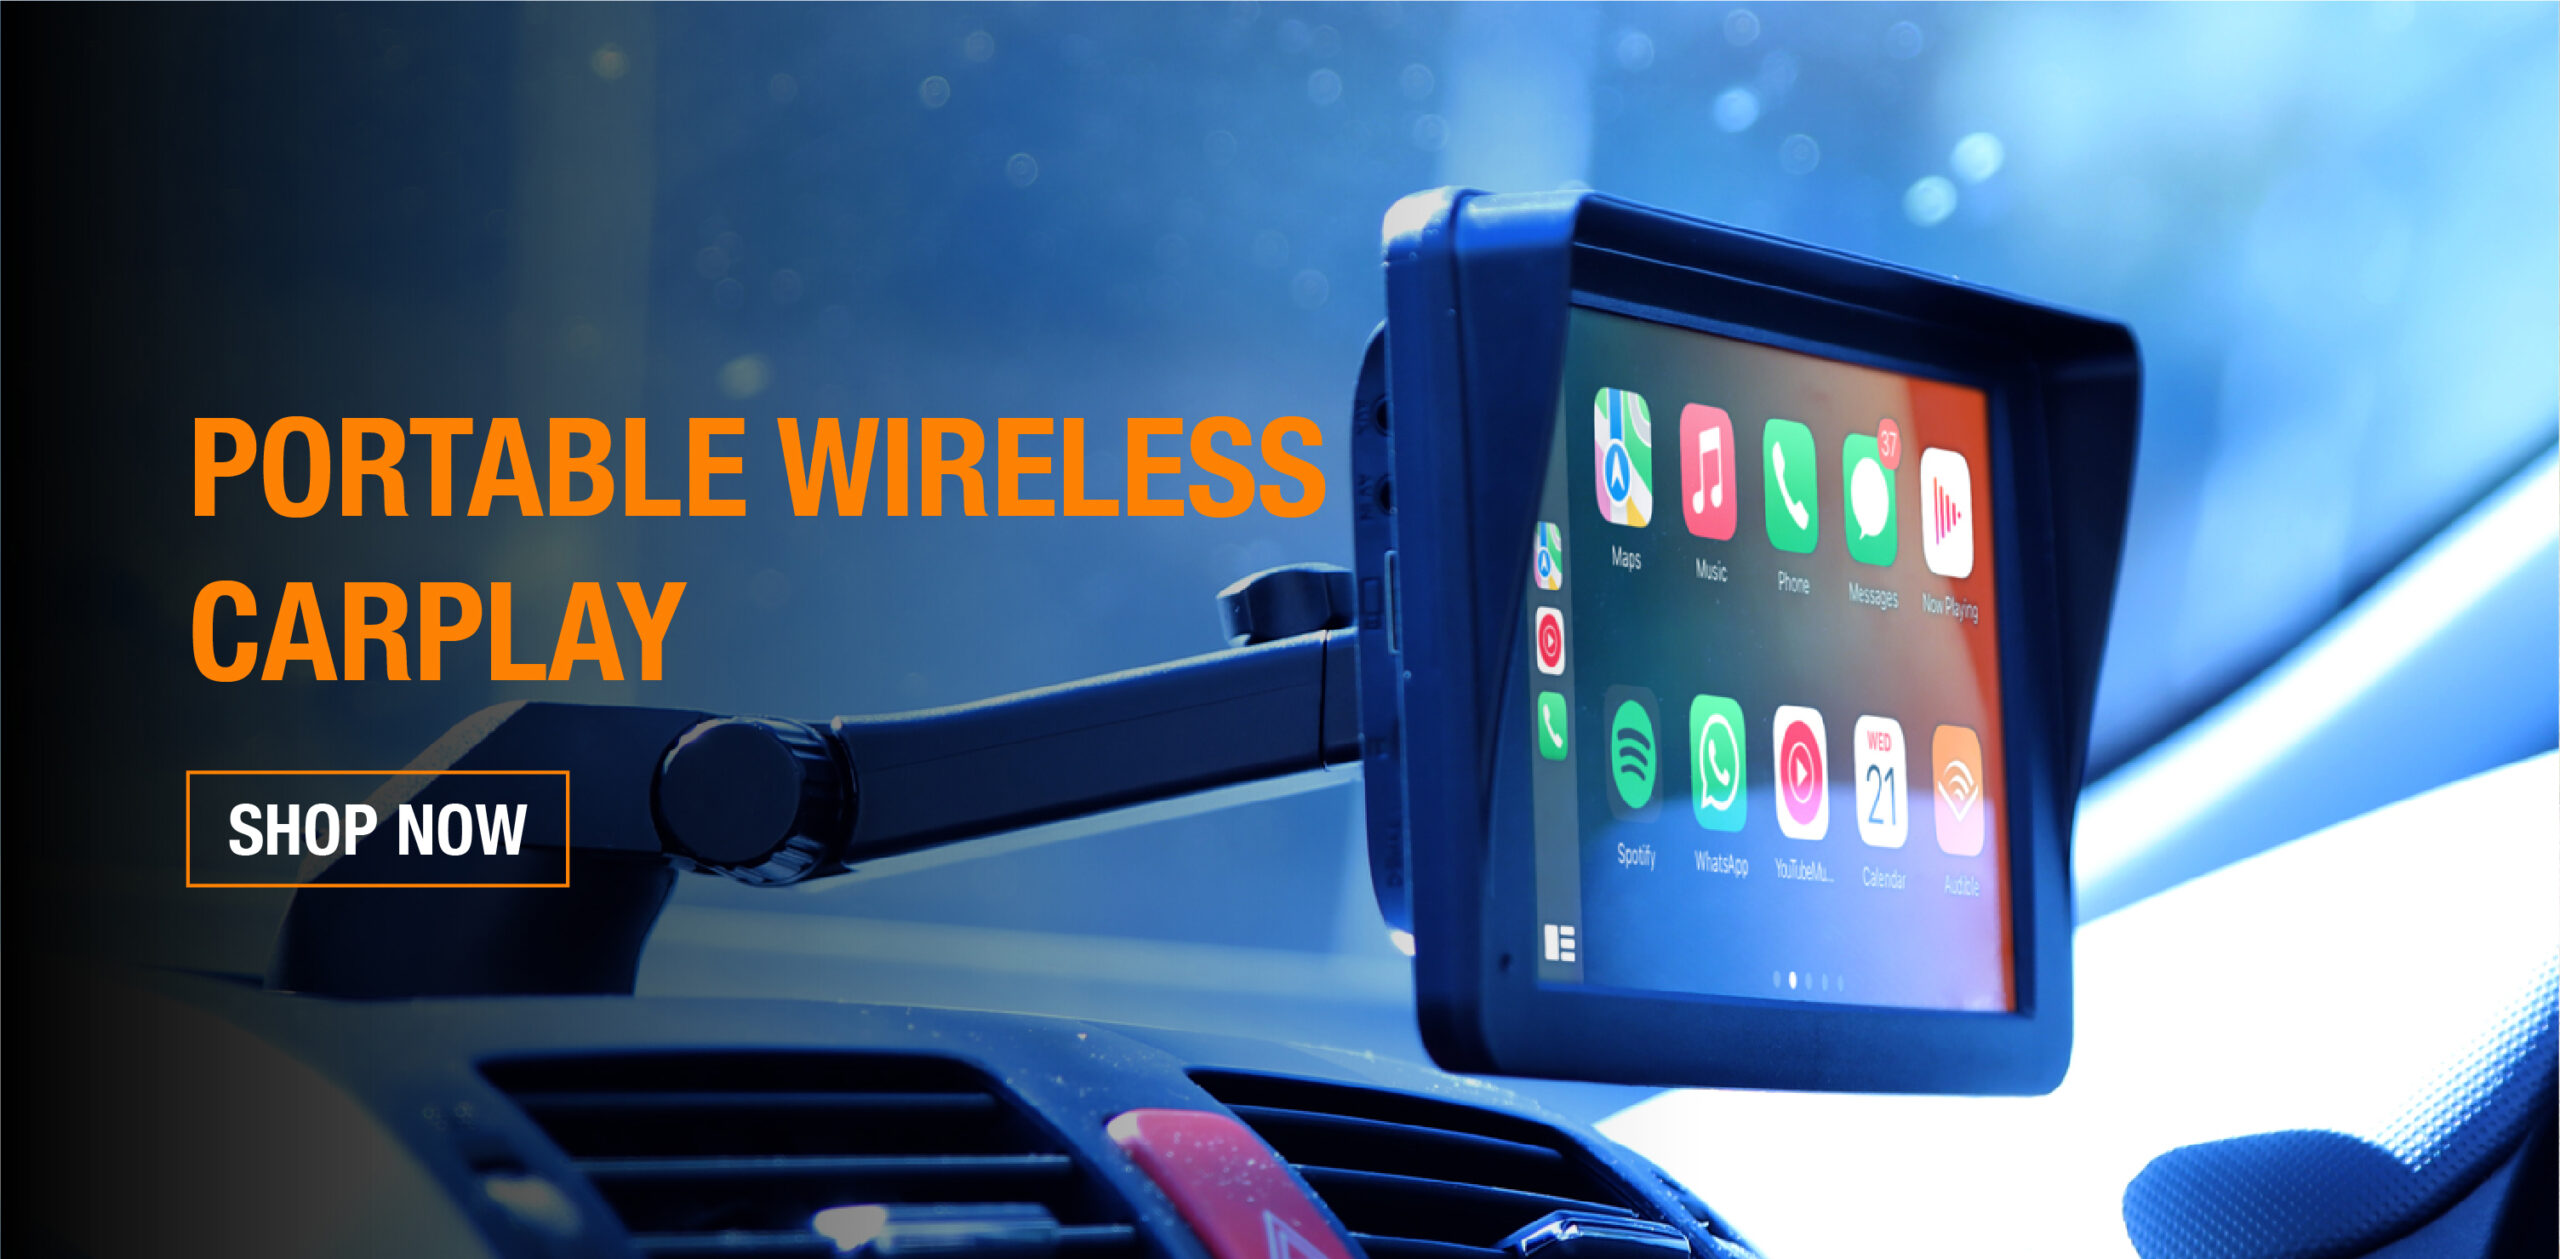 Portable Wireless Carplay, Shop Now